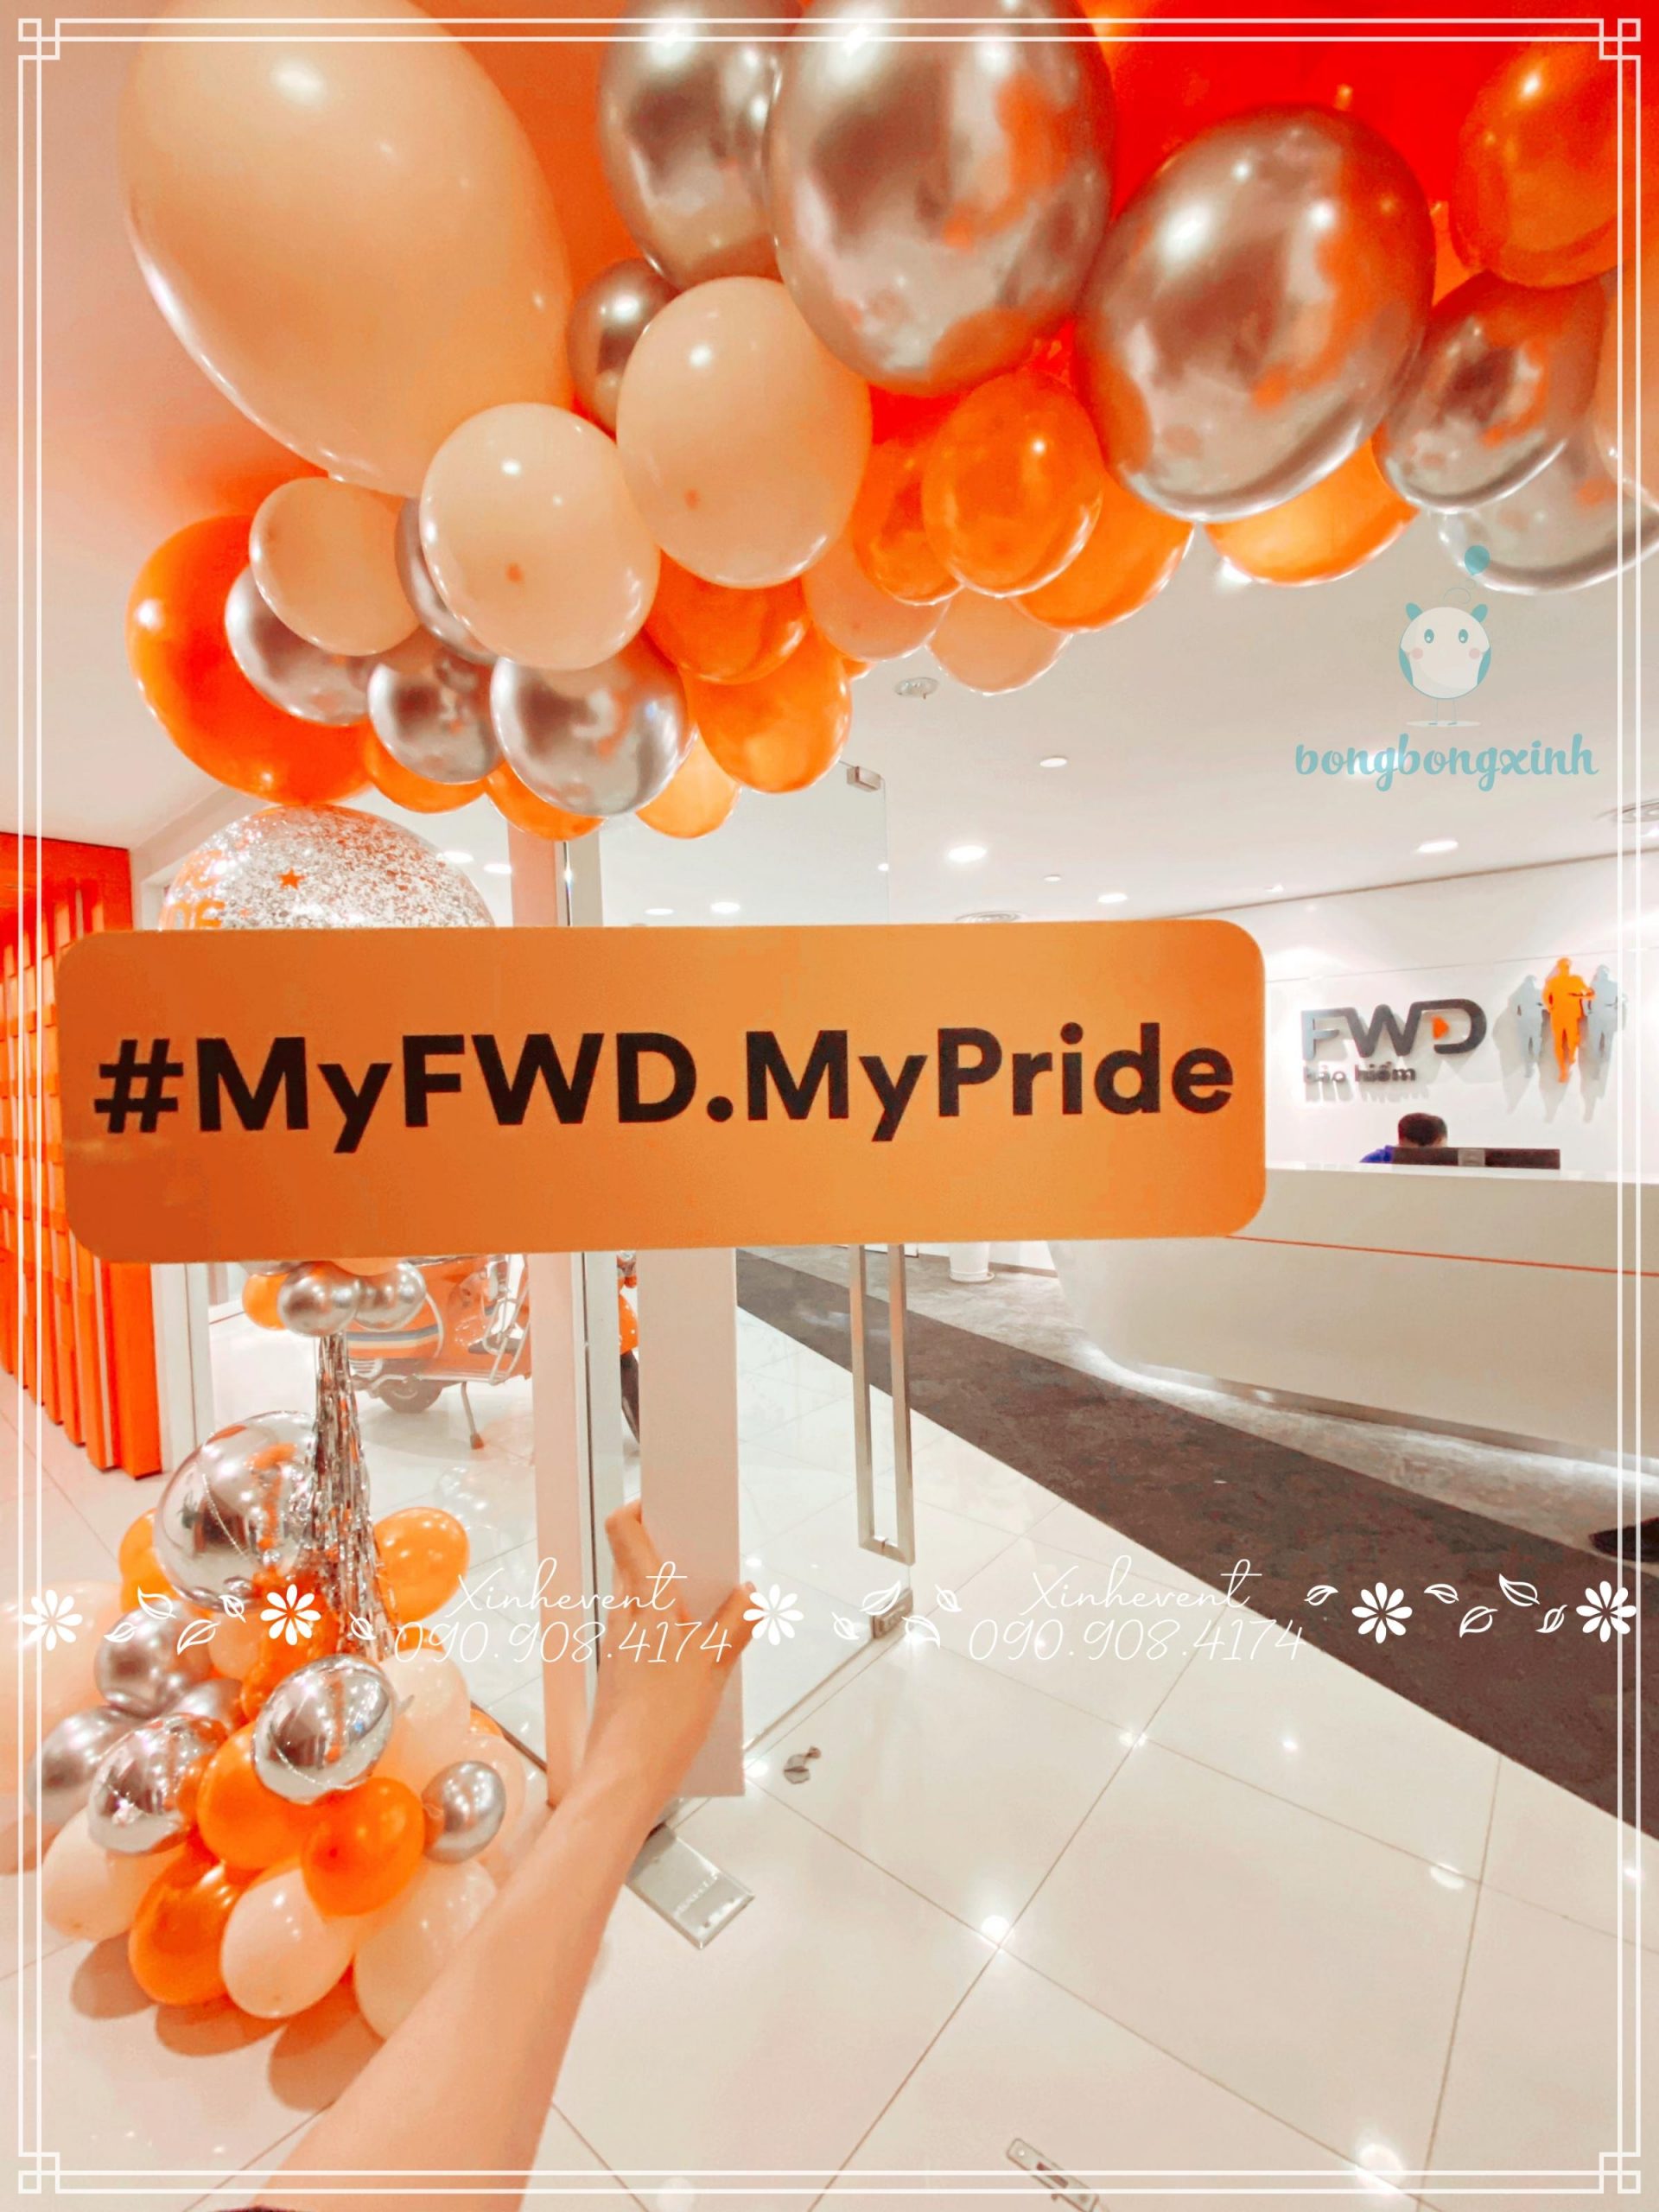 Hashtag MyFWD.MyPride của công ty